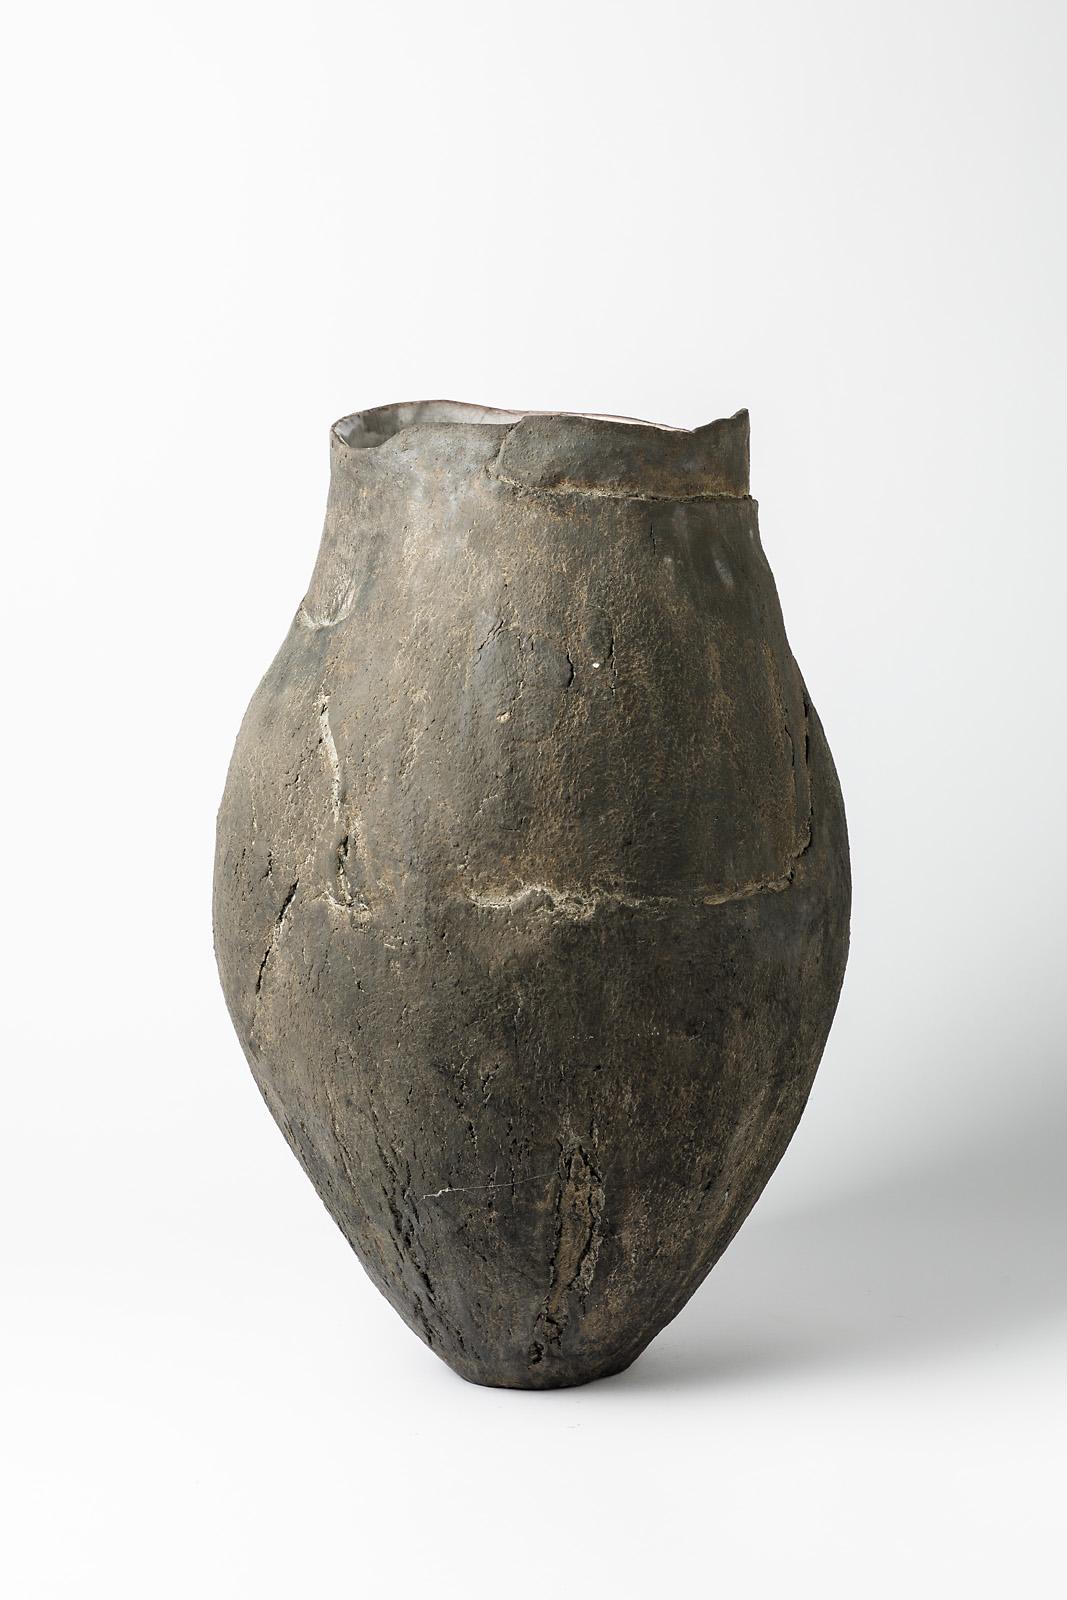 Contemporary Ceramic Vase with Glaze Decoration by Gisele Buthod, Garçon, circa 2005